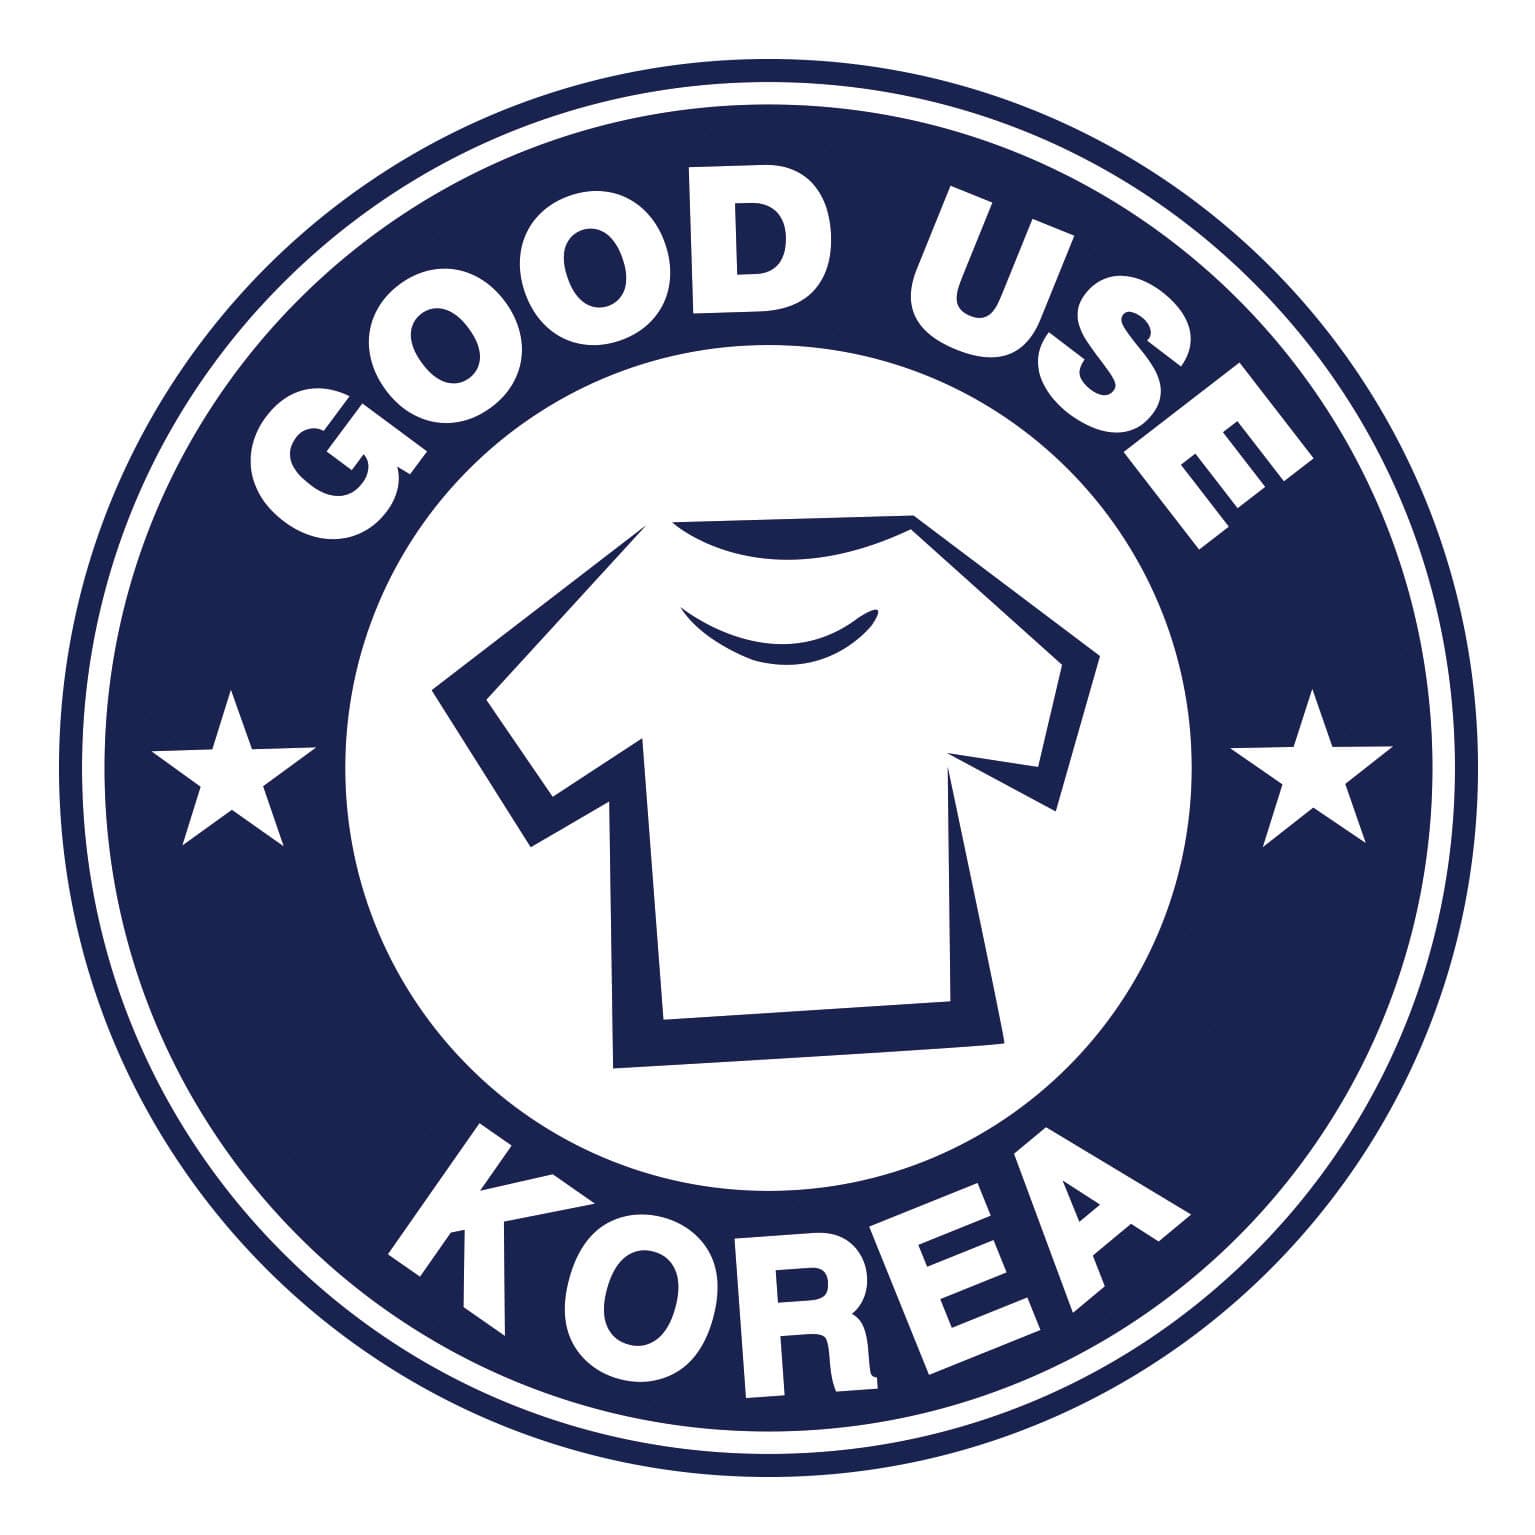 GOODUSE KOREA